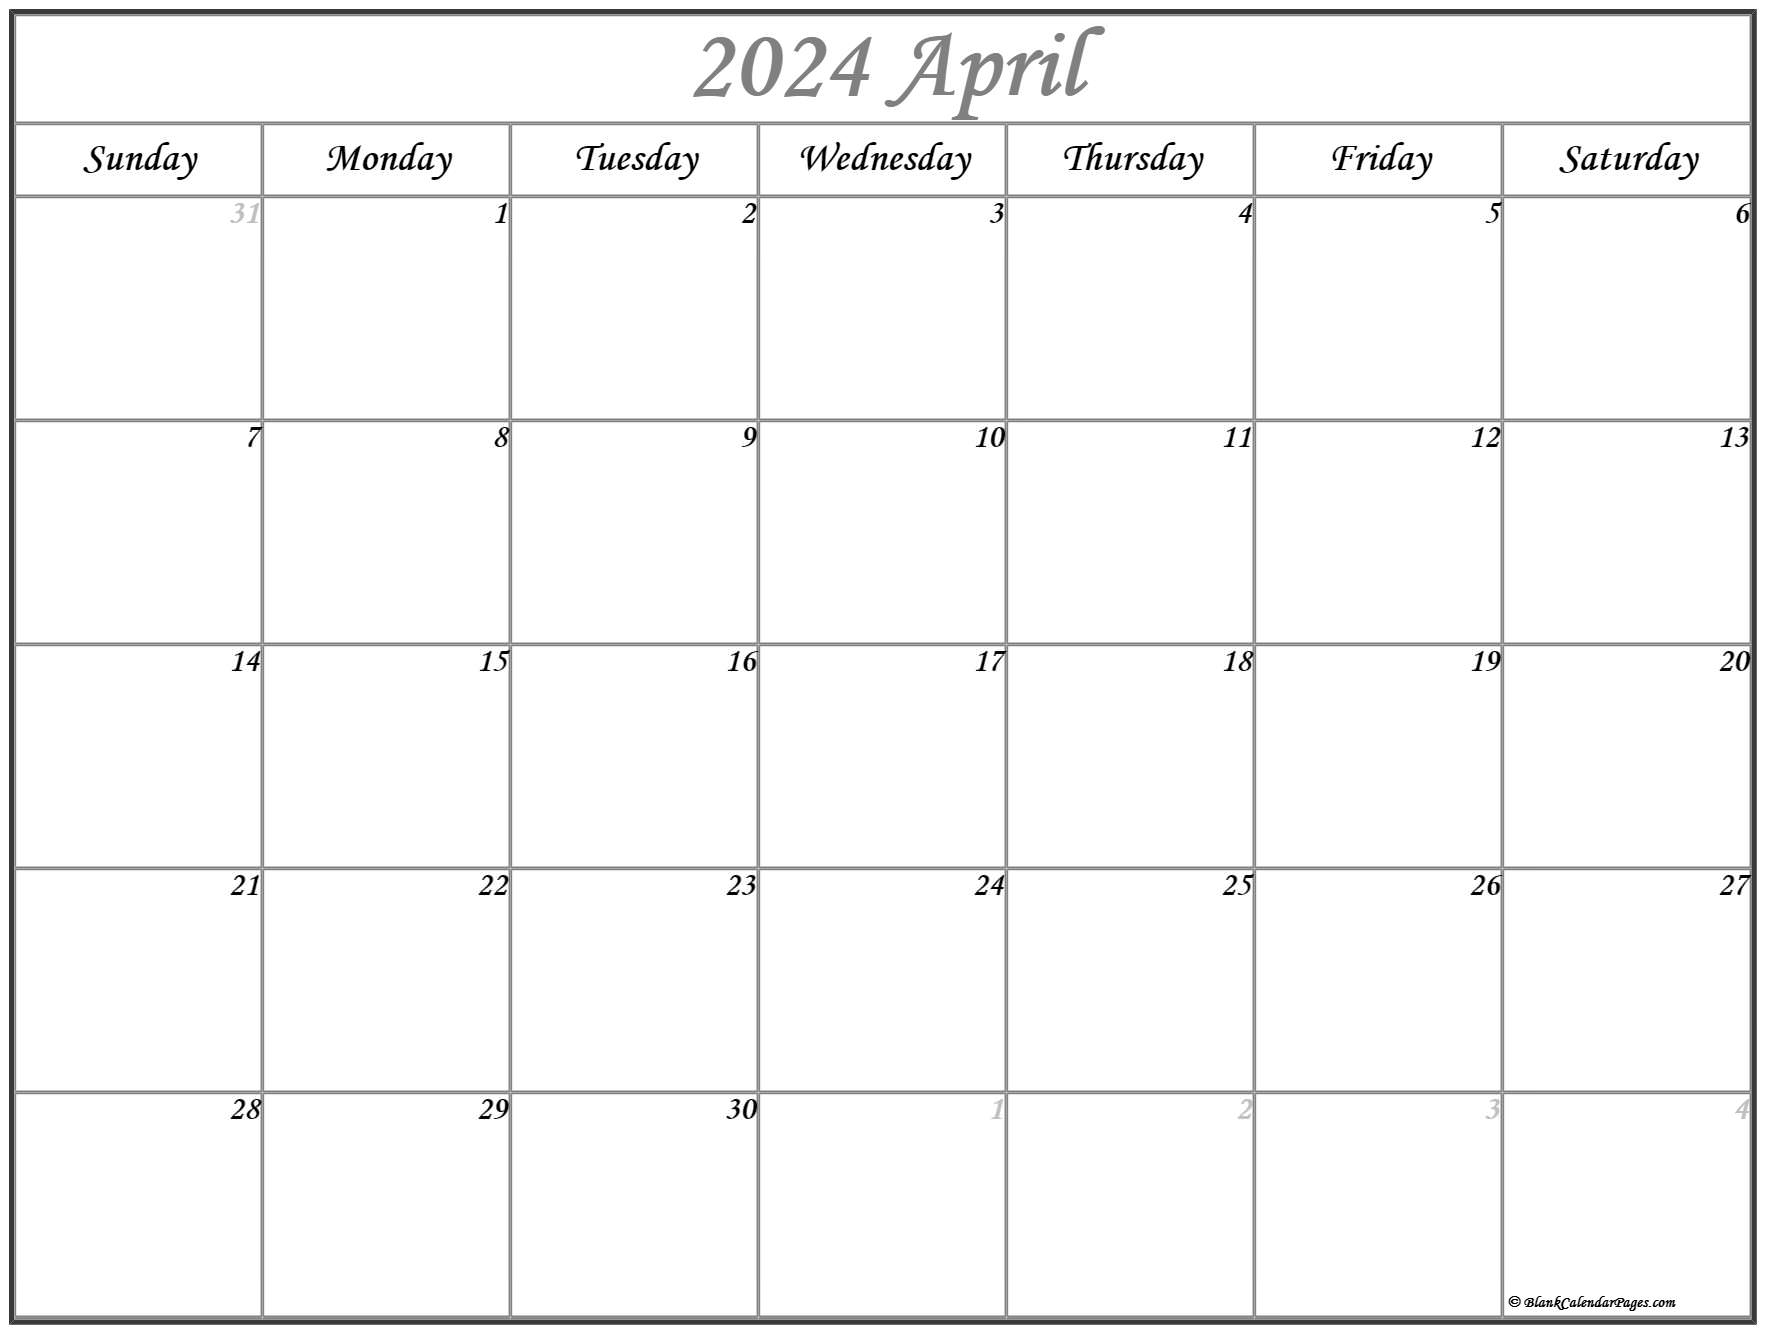 April 2022 calendar | free printable monthly calendars